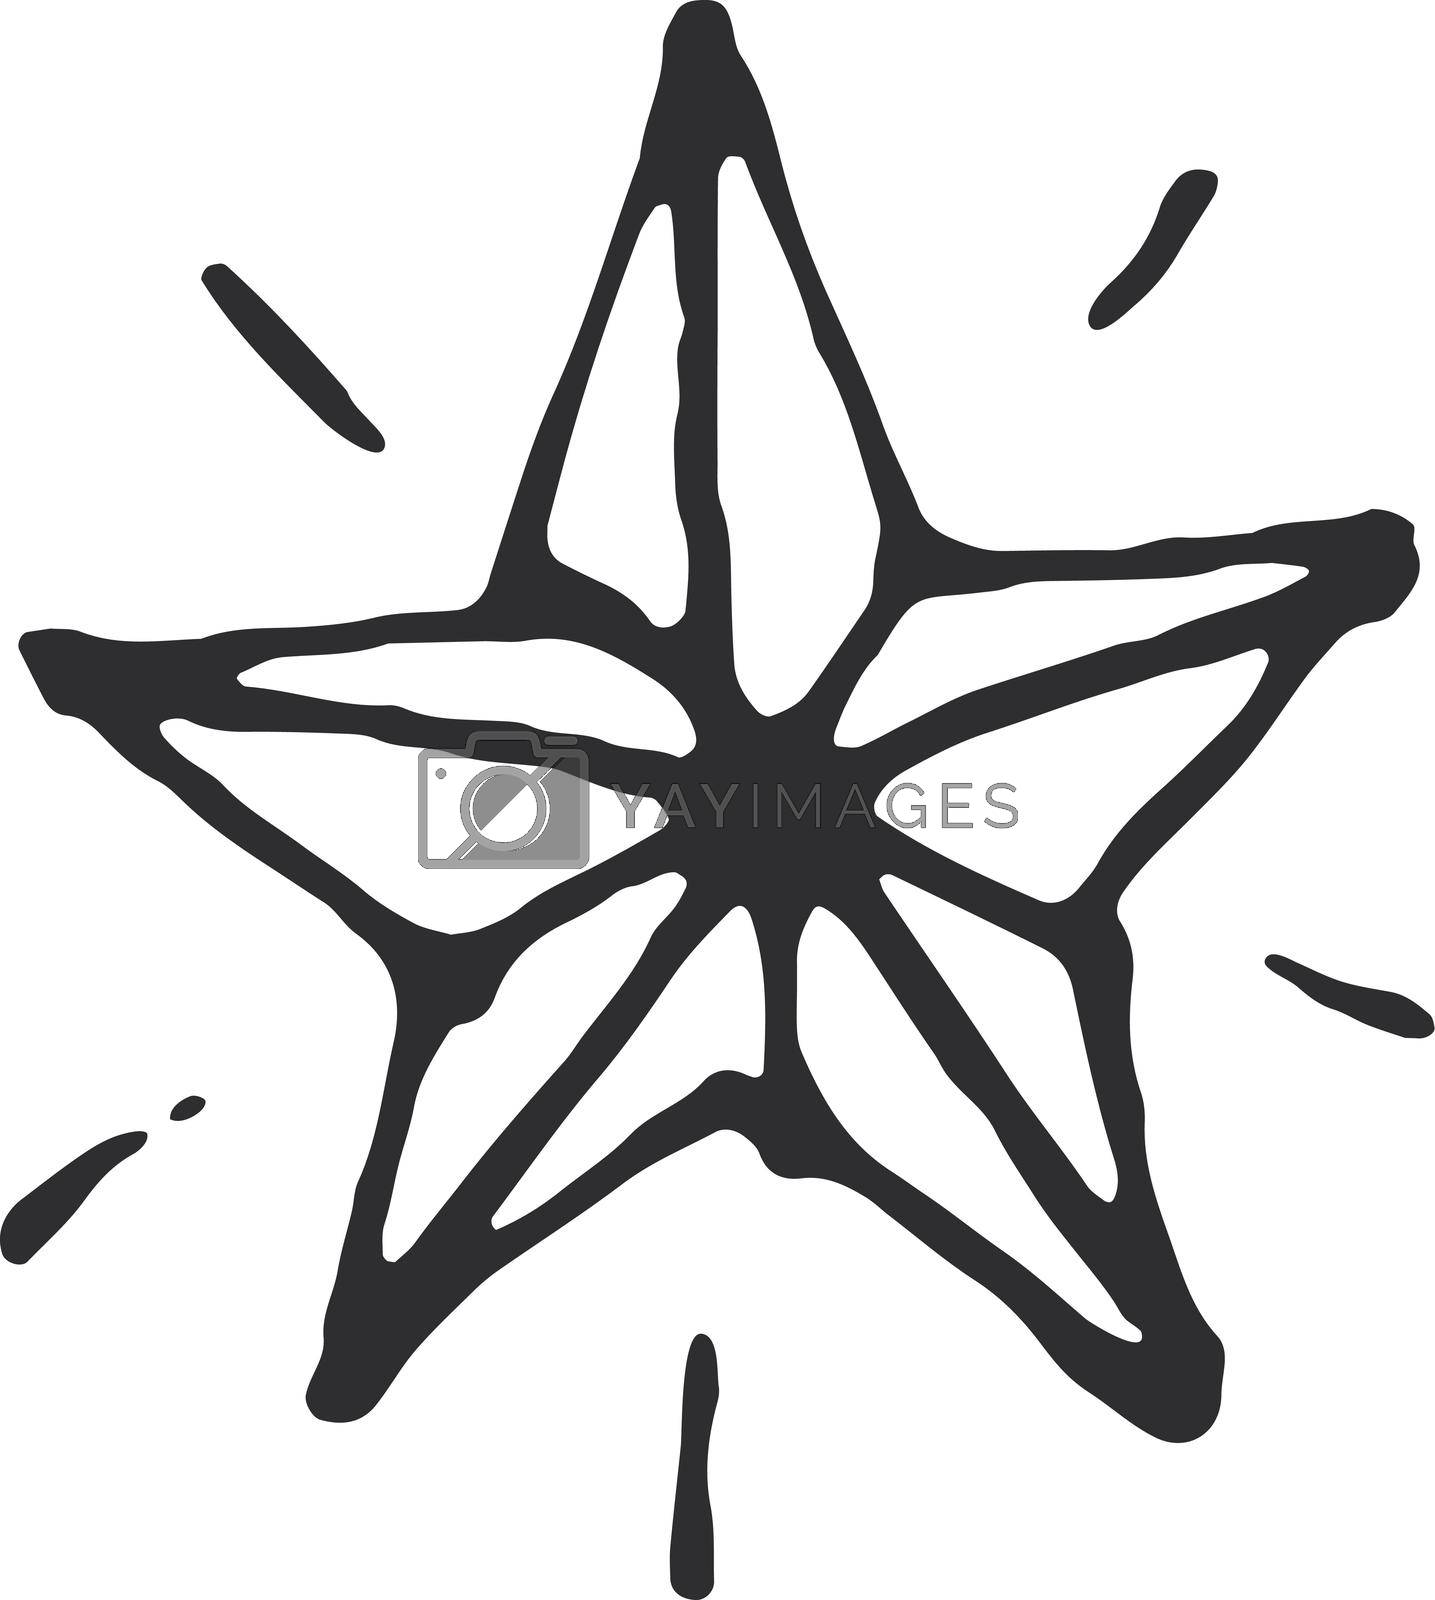 Royalty free image of Shining star sketch. Hand drawn decorative doodle by LadadikArt